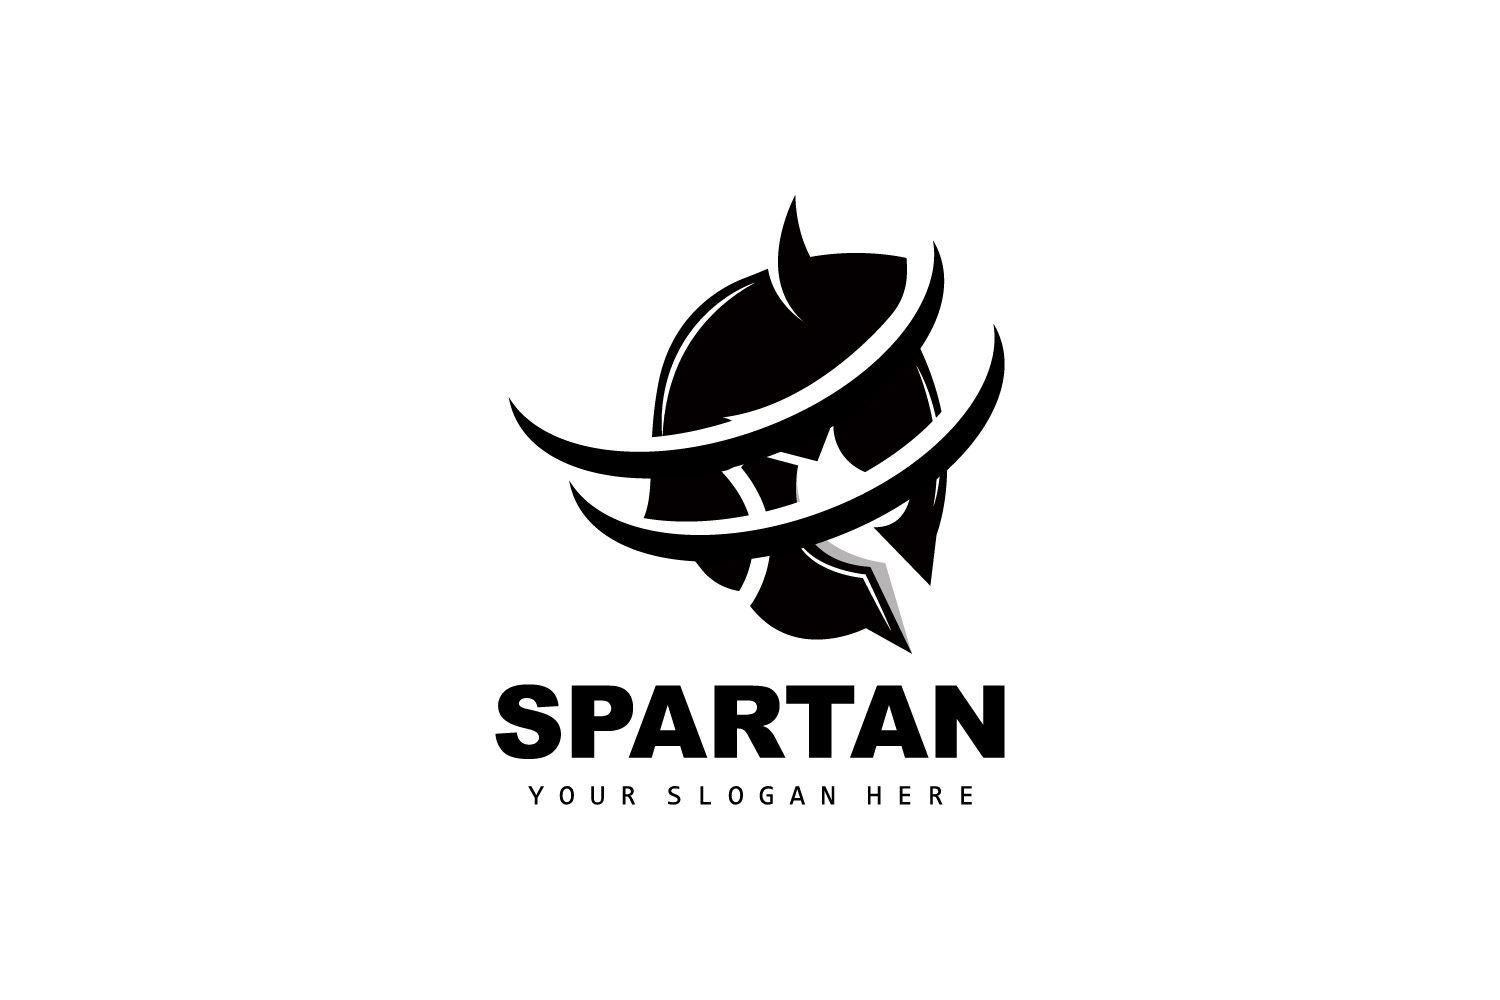 Spartan Logo Vector Silhouette Knight DesignV14